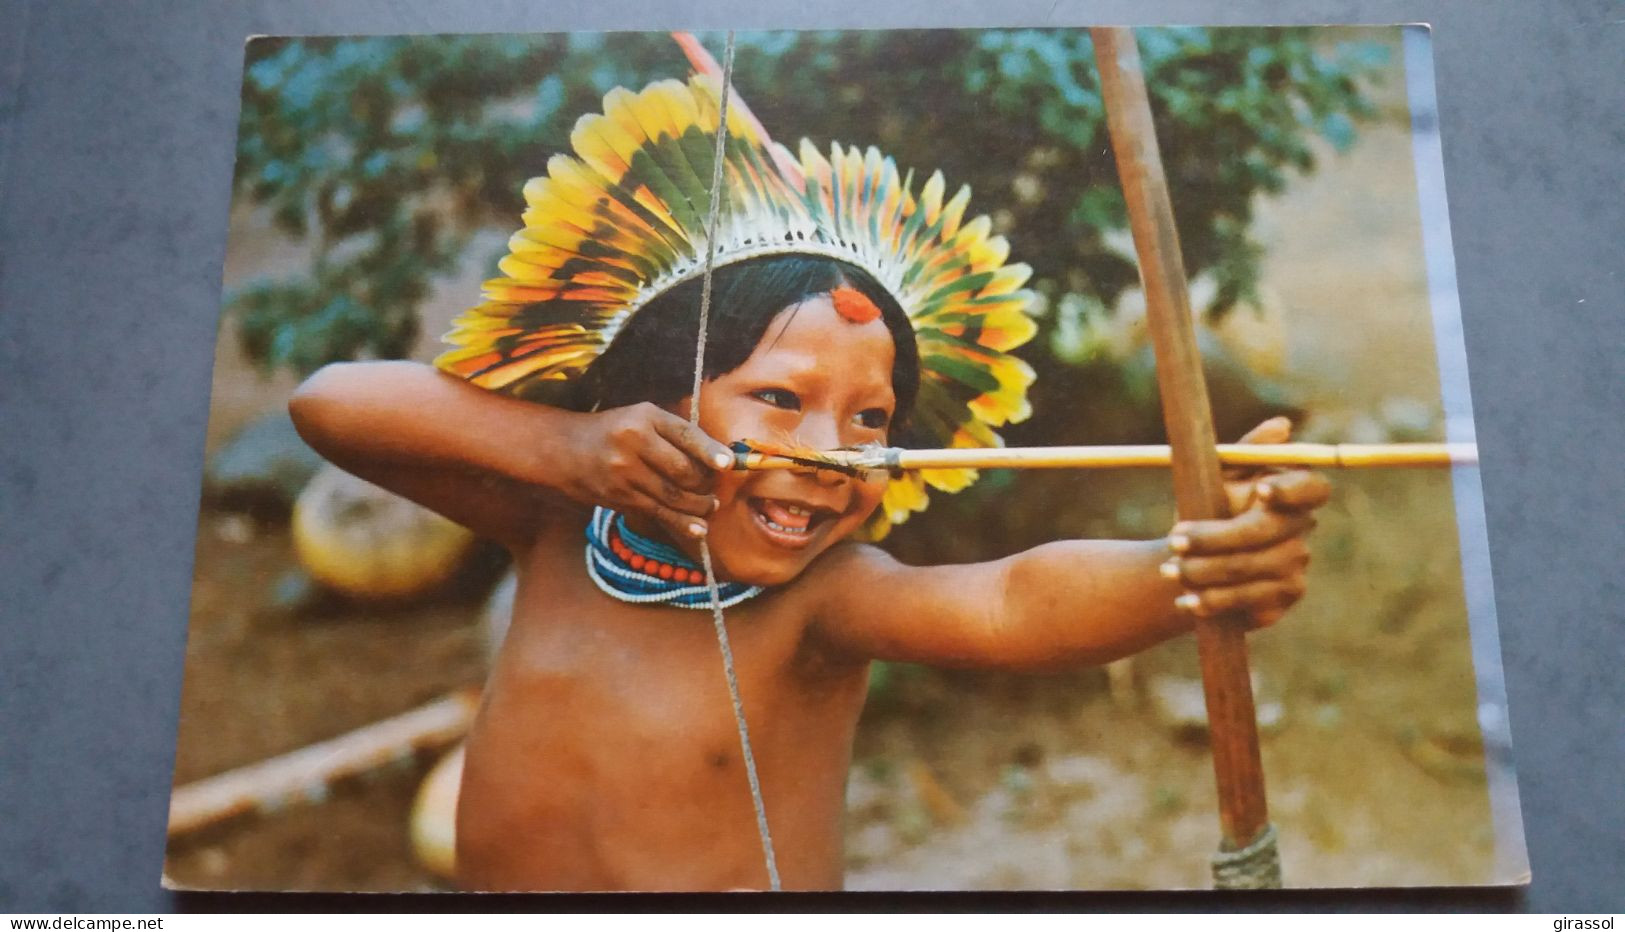 CPSM JEUNE INDIEN JURUNA ARC FLECHE PLUMES PARC XINGU  AMERIQUE BRASIL BRESIL NATIVO AMAZONIE ETHNIQUE CULTURE - America